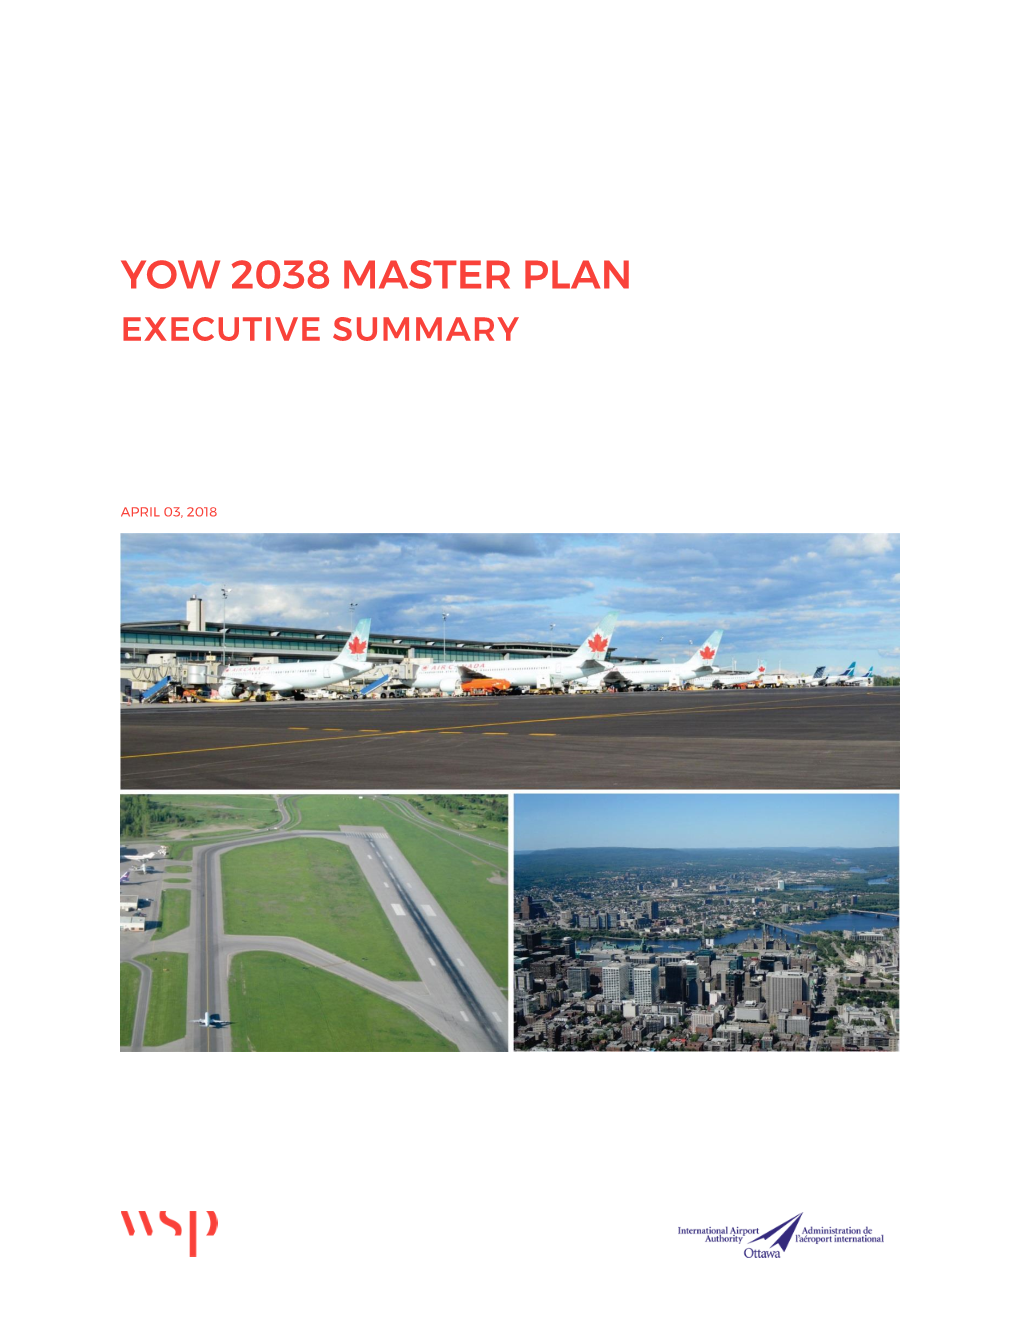 Yow 2038 Master Plan Executive Summary